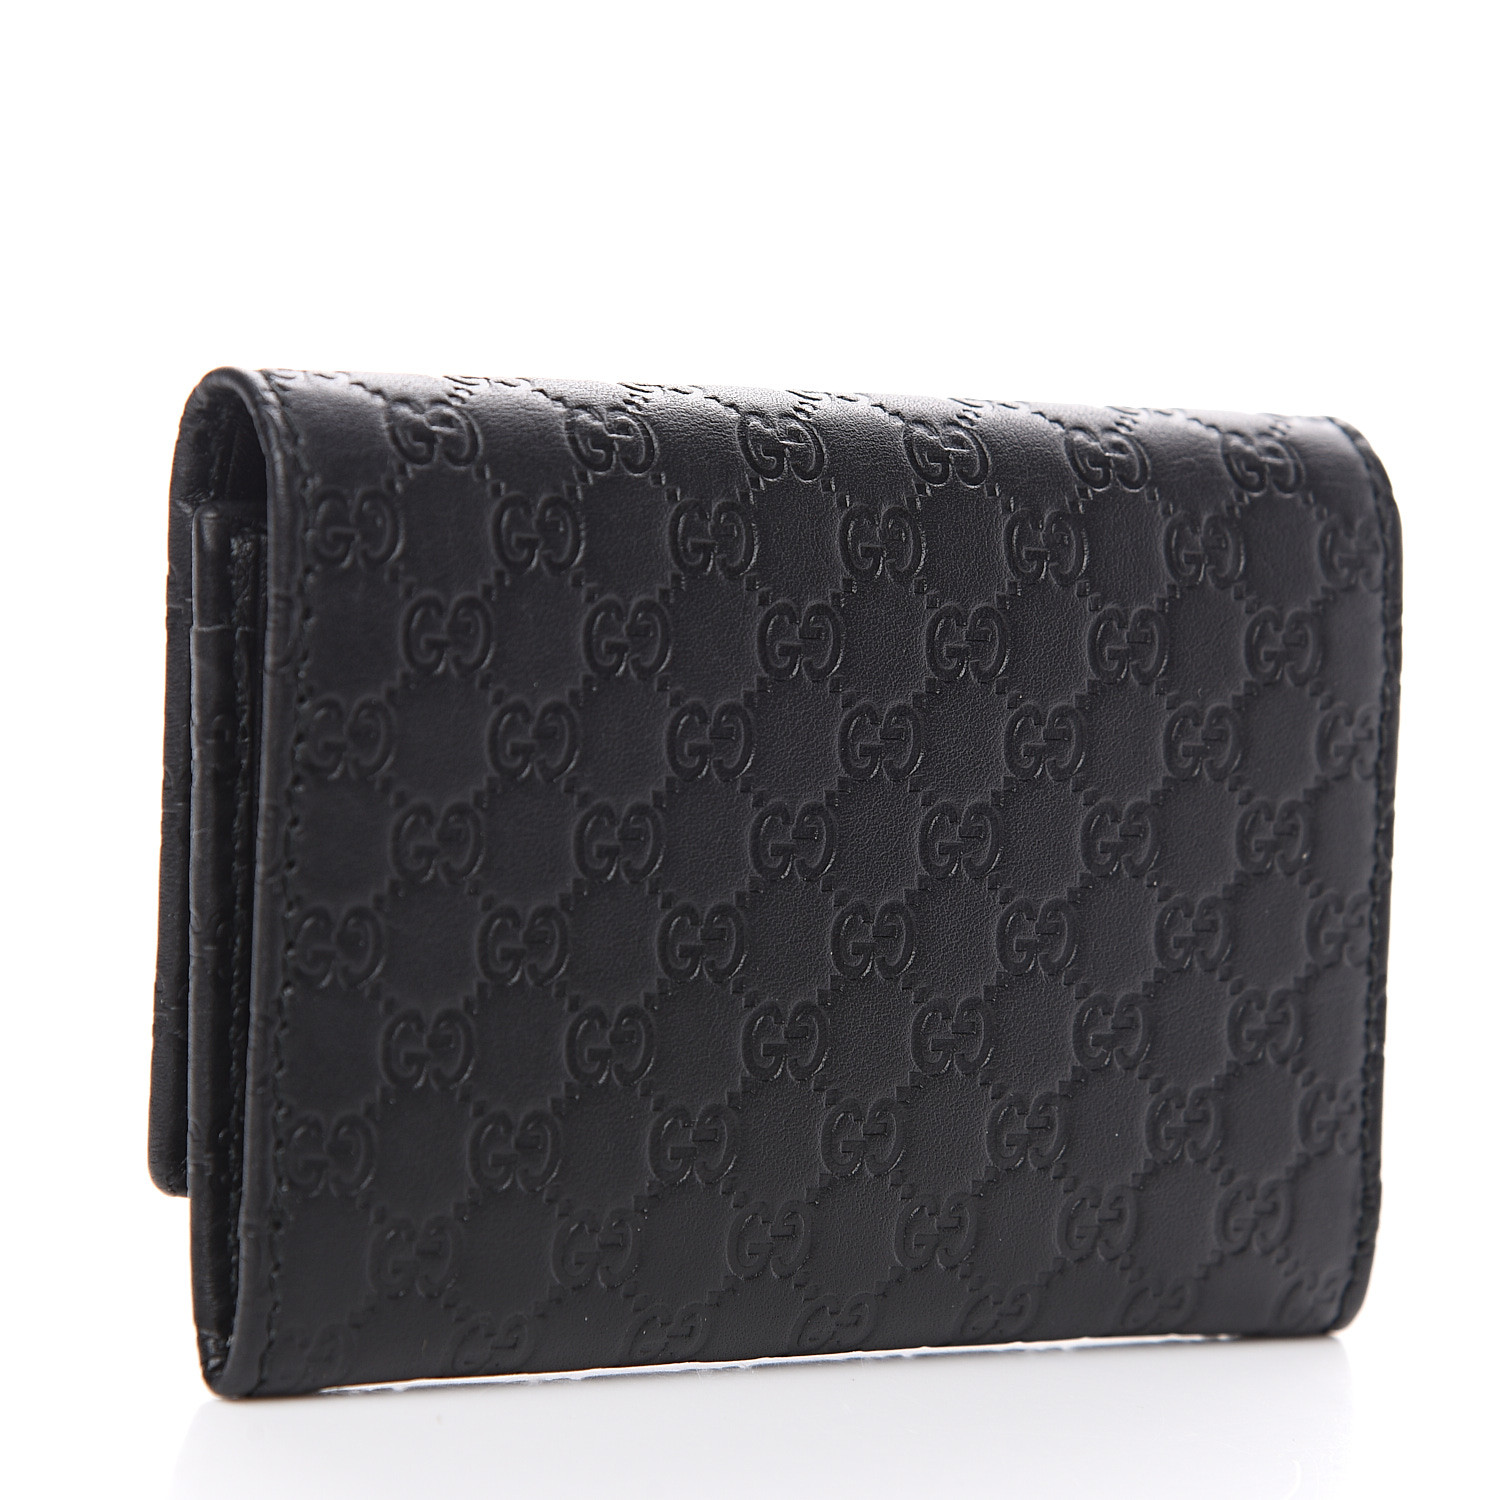 GUCCI Microguccissima Compact Flap Wallet Black 548590